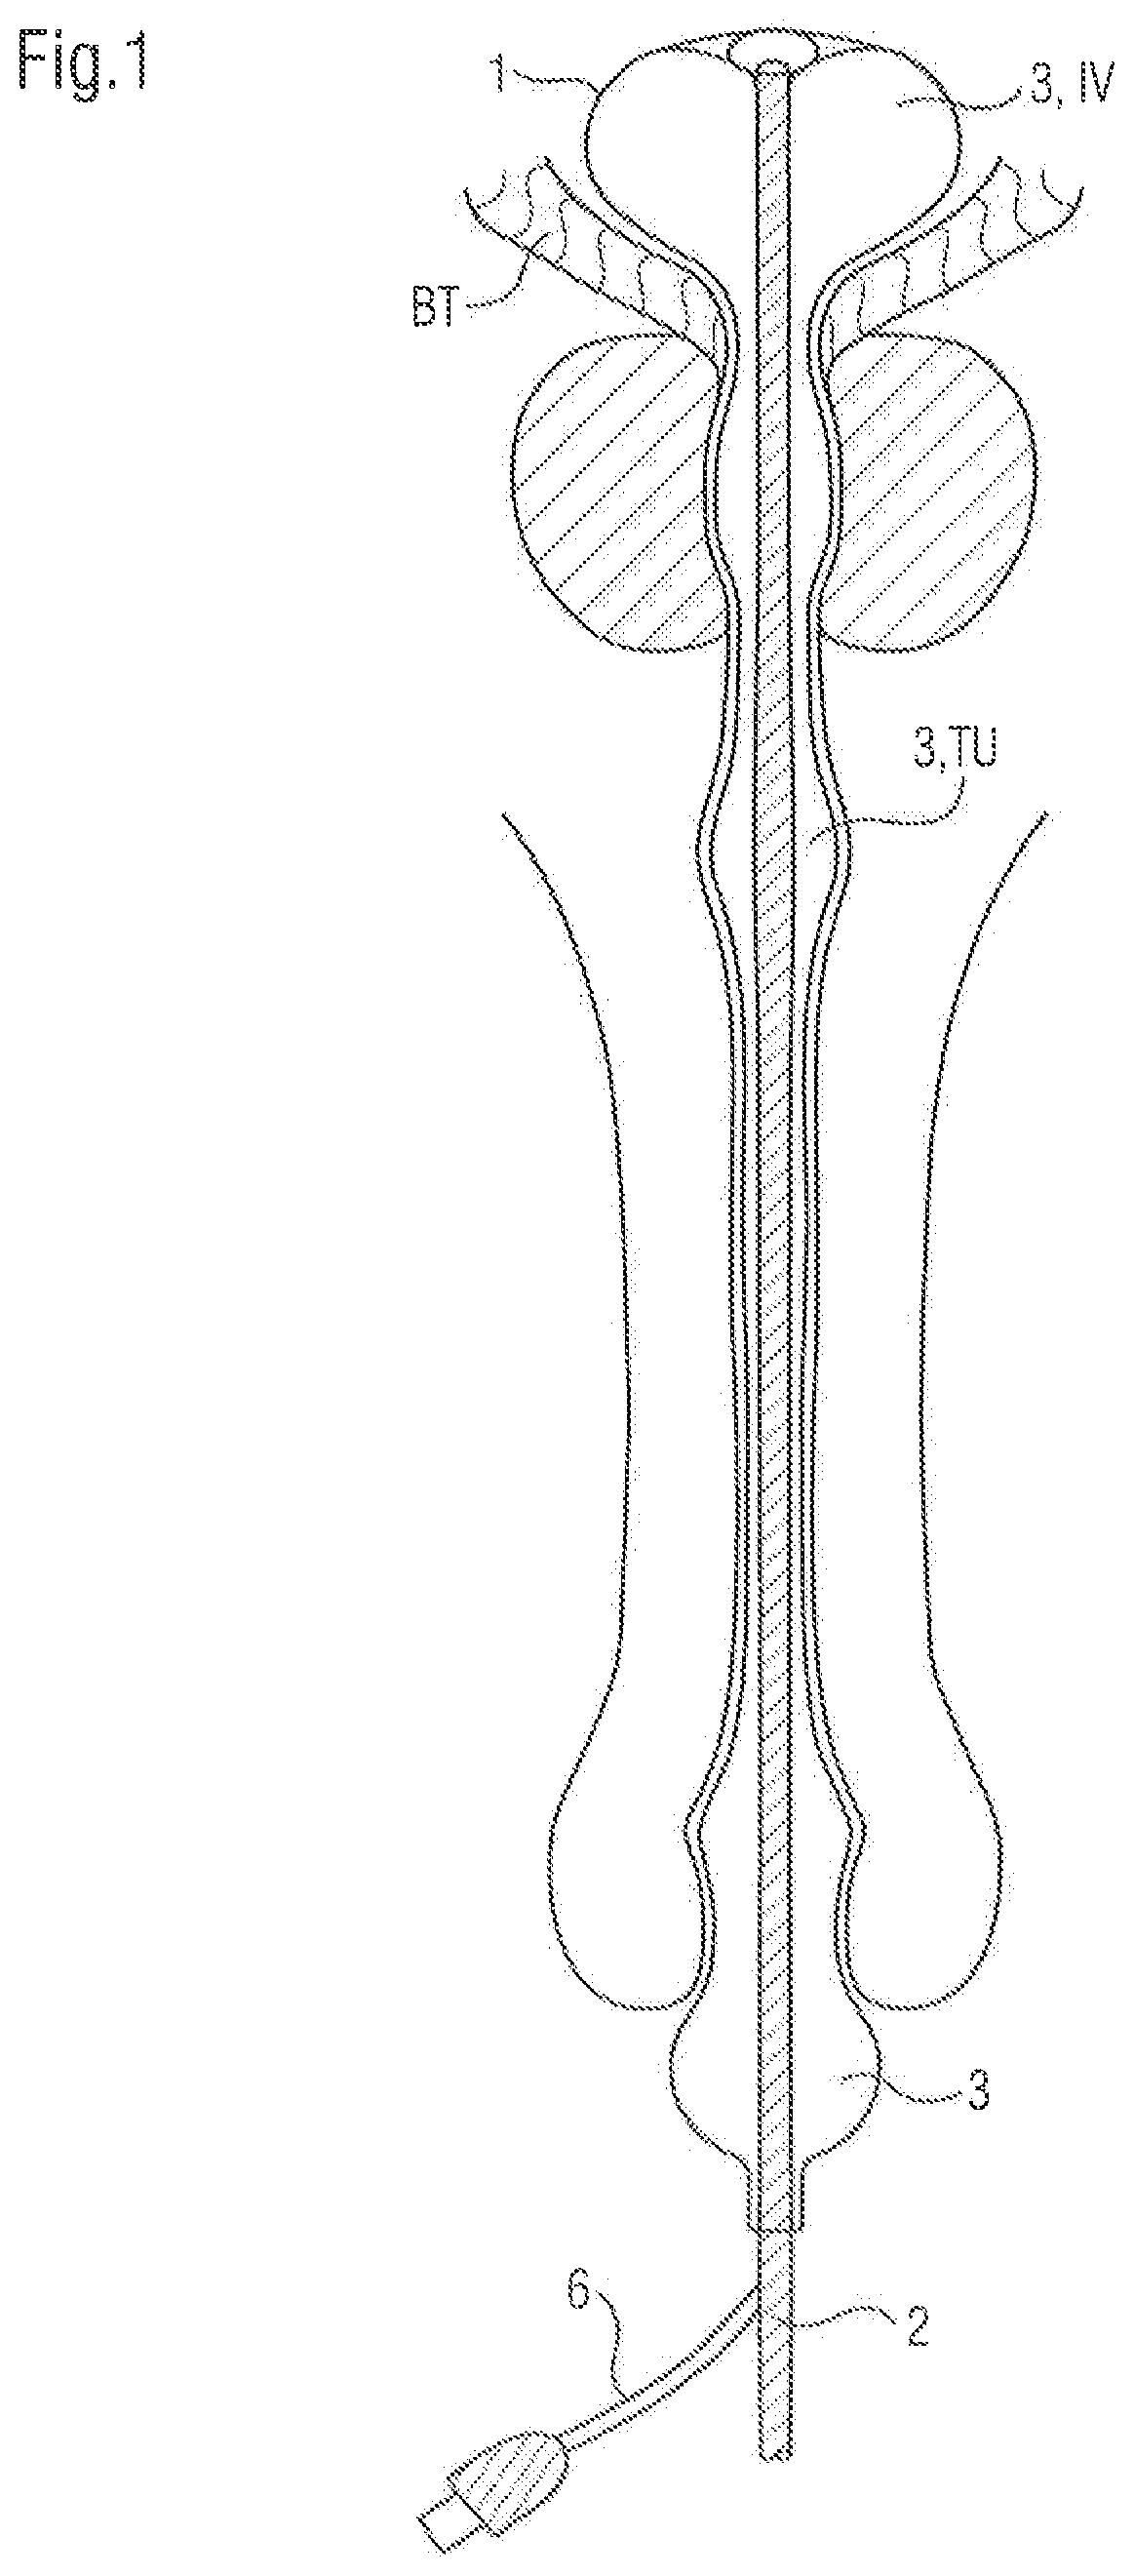 Bladder catheter for the minimally invasive discharge of urine